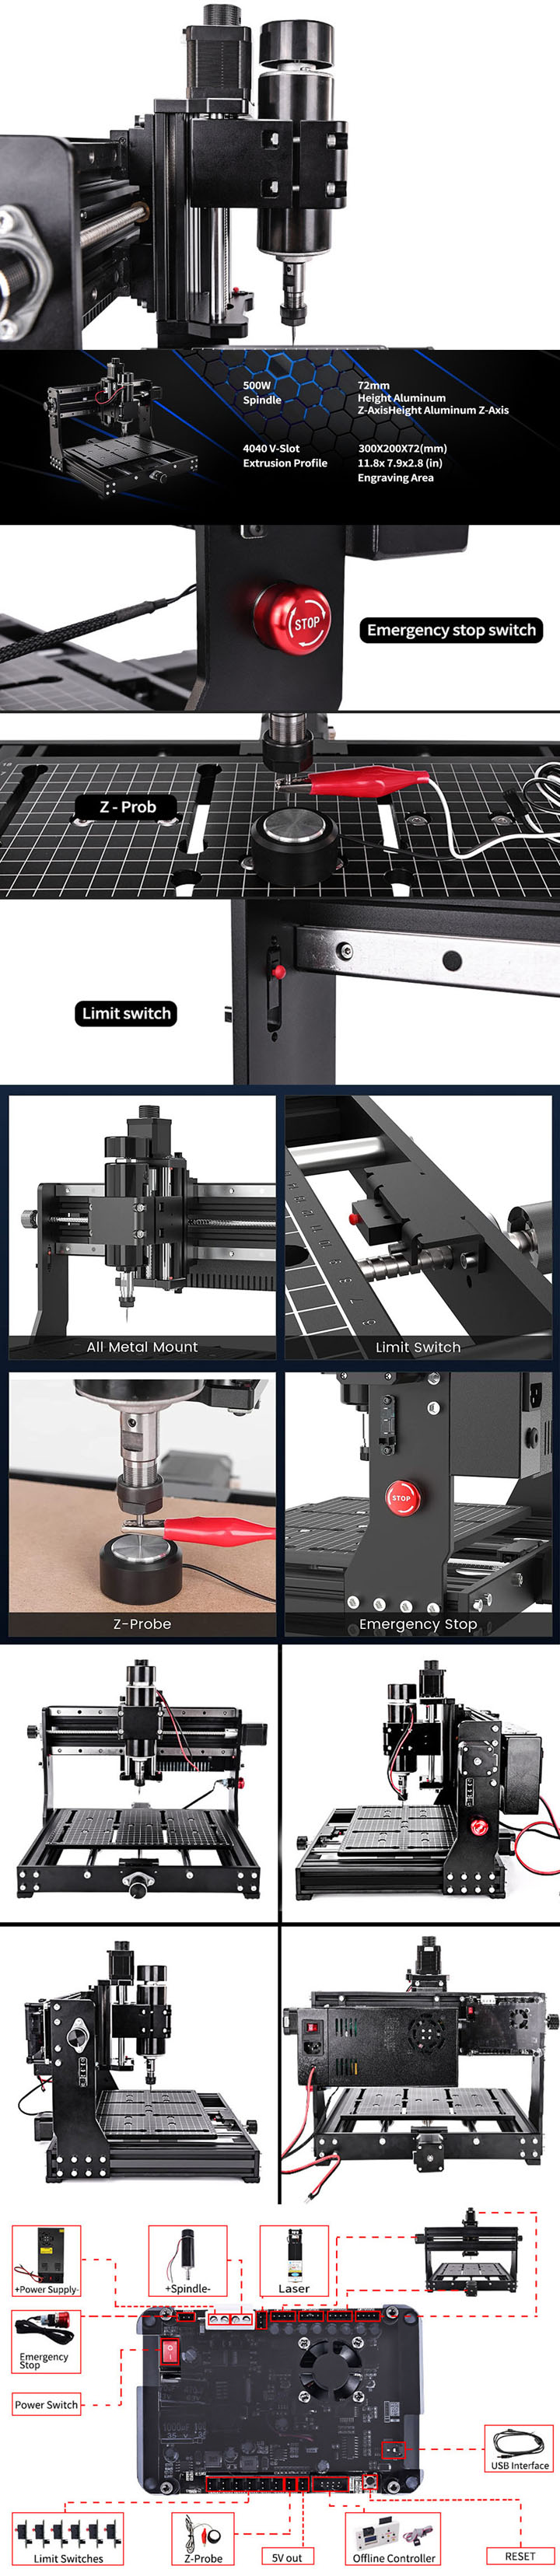 machine de gravure laser 3 axes